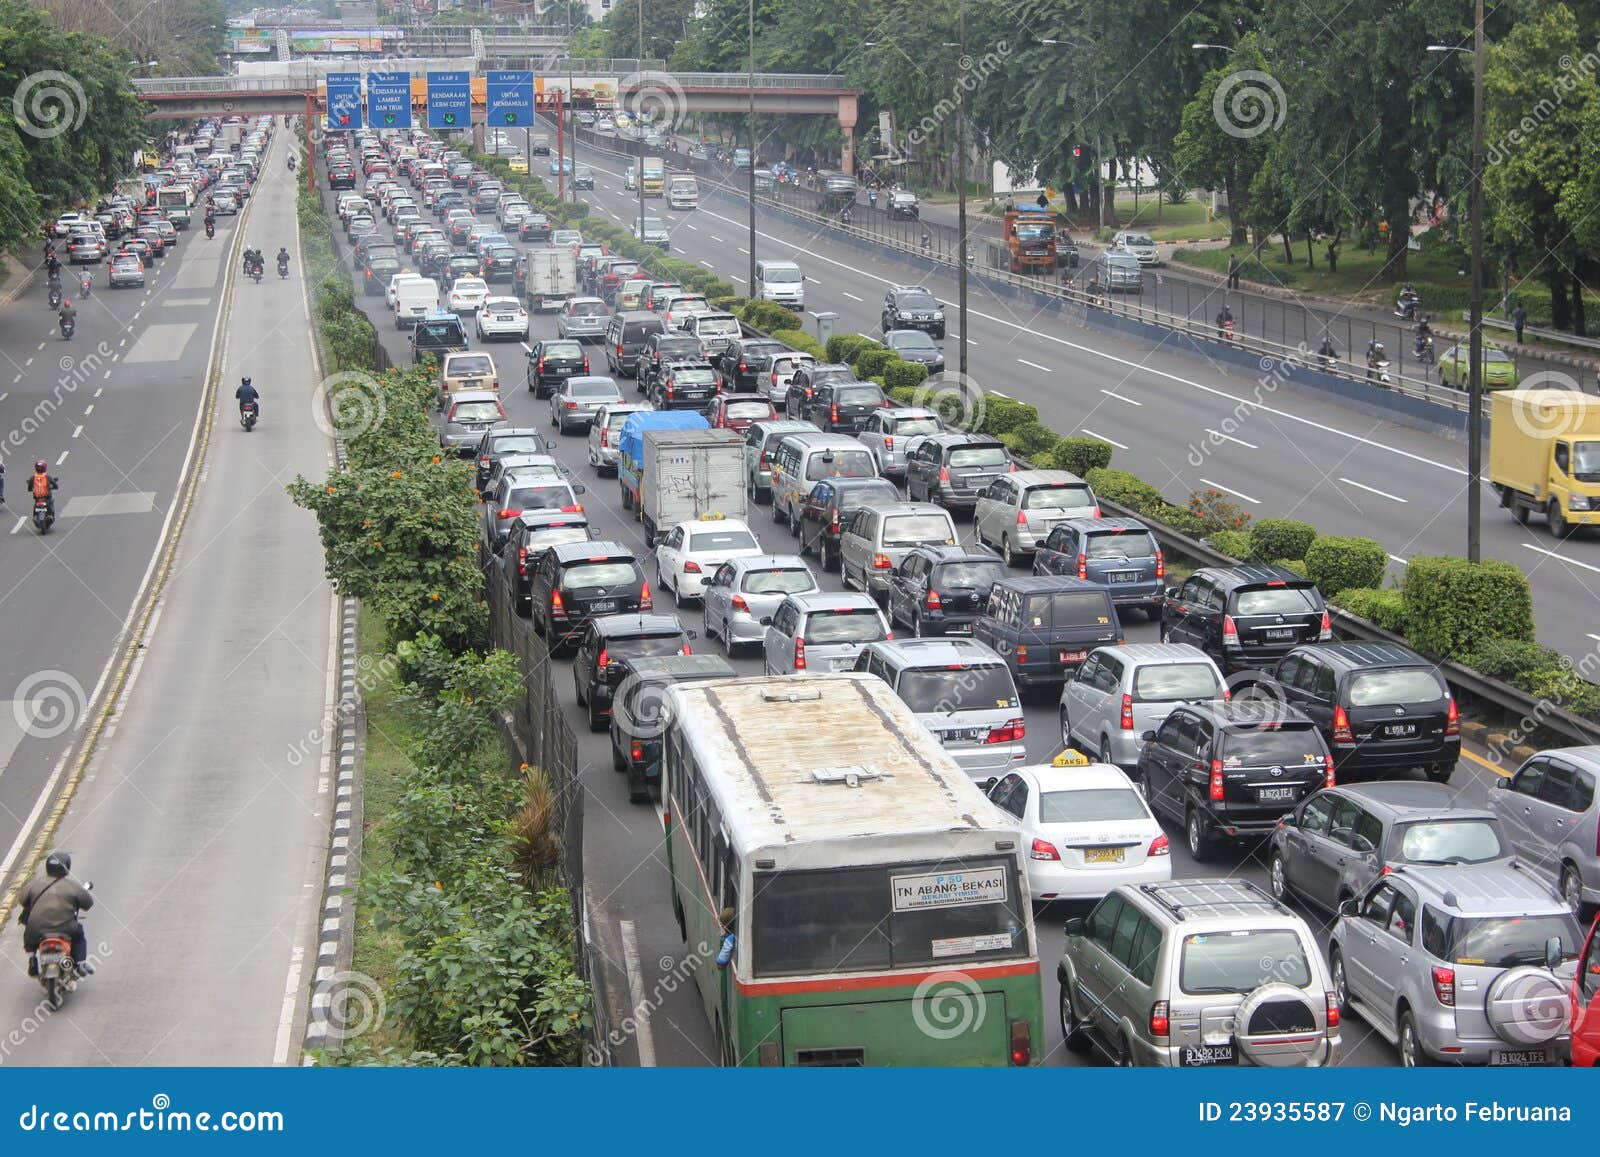 Traffic Jam In Jakarta Editorial Photography - Image: 23935587